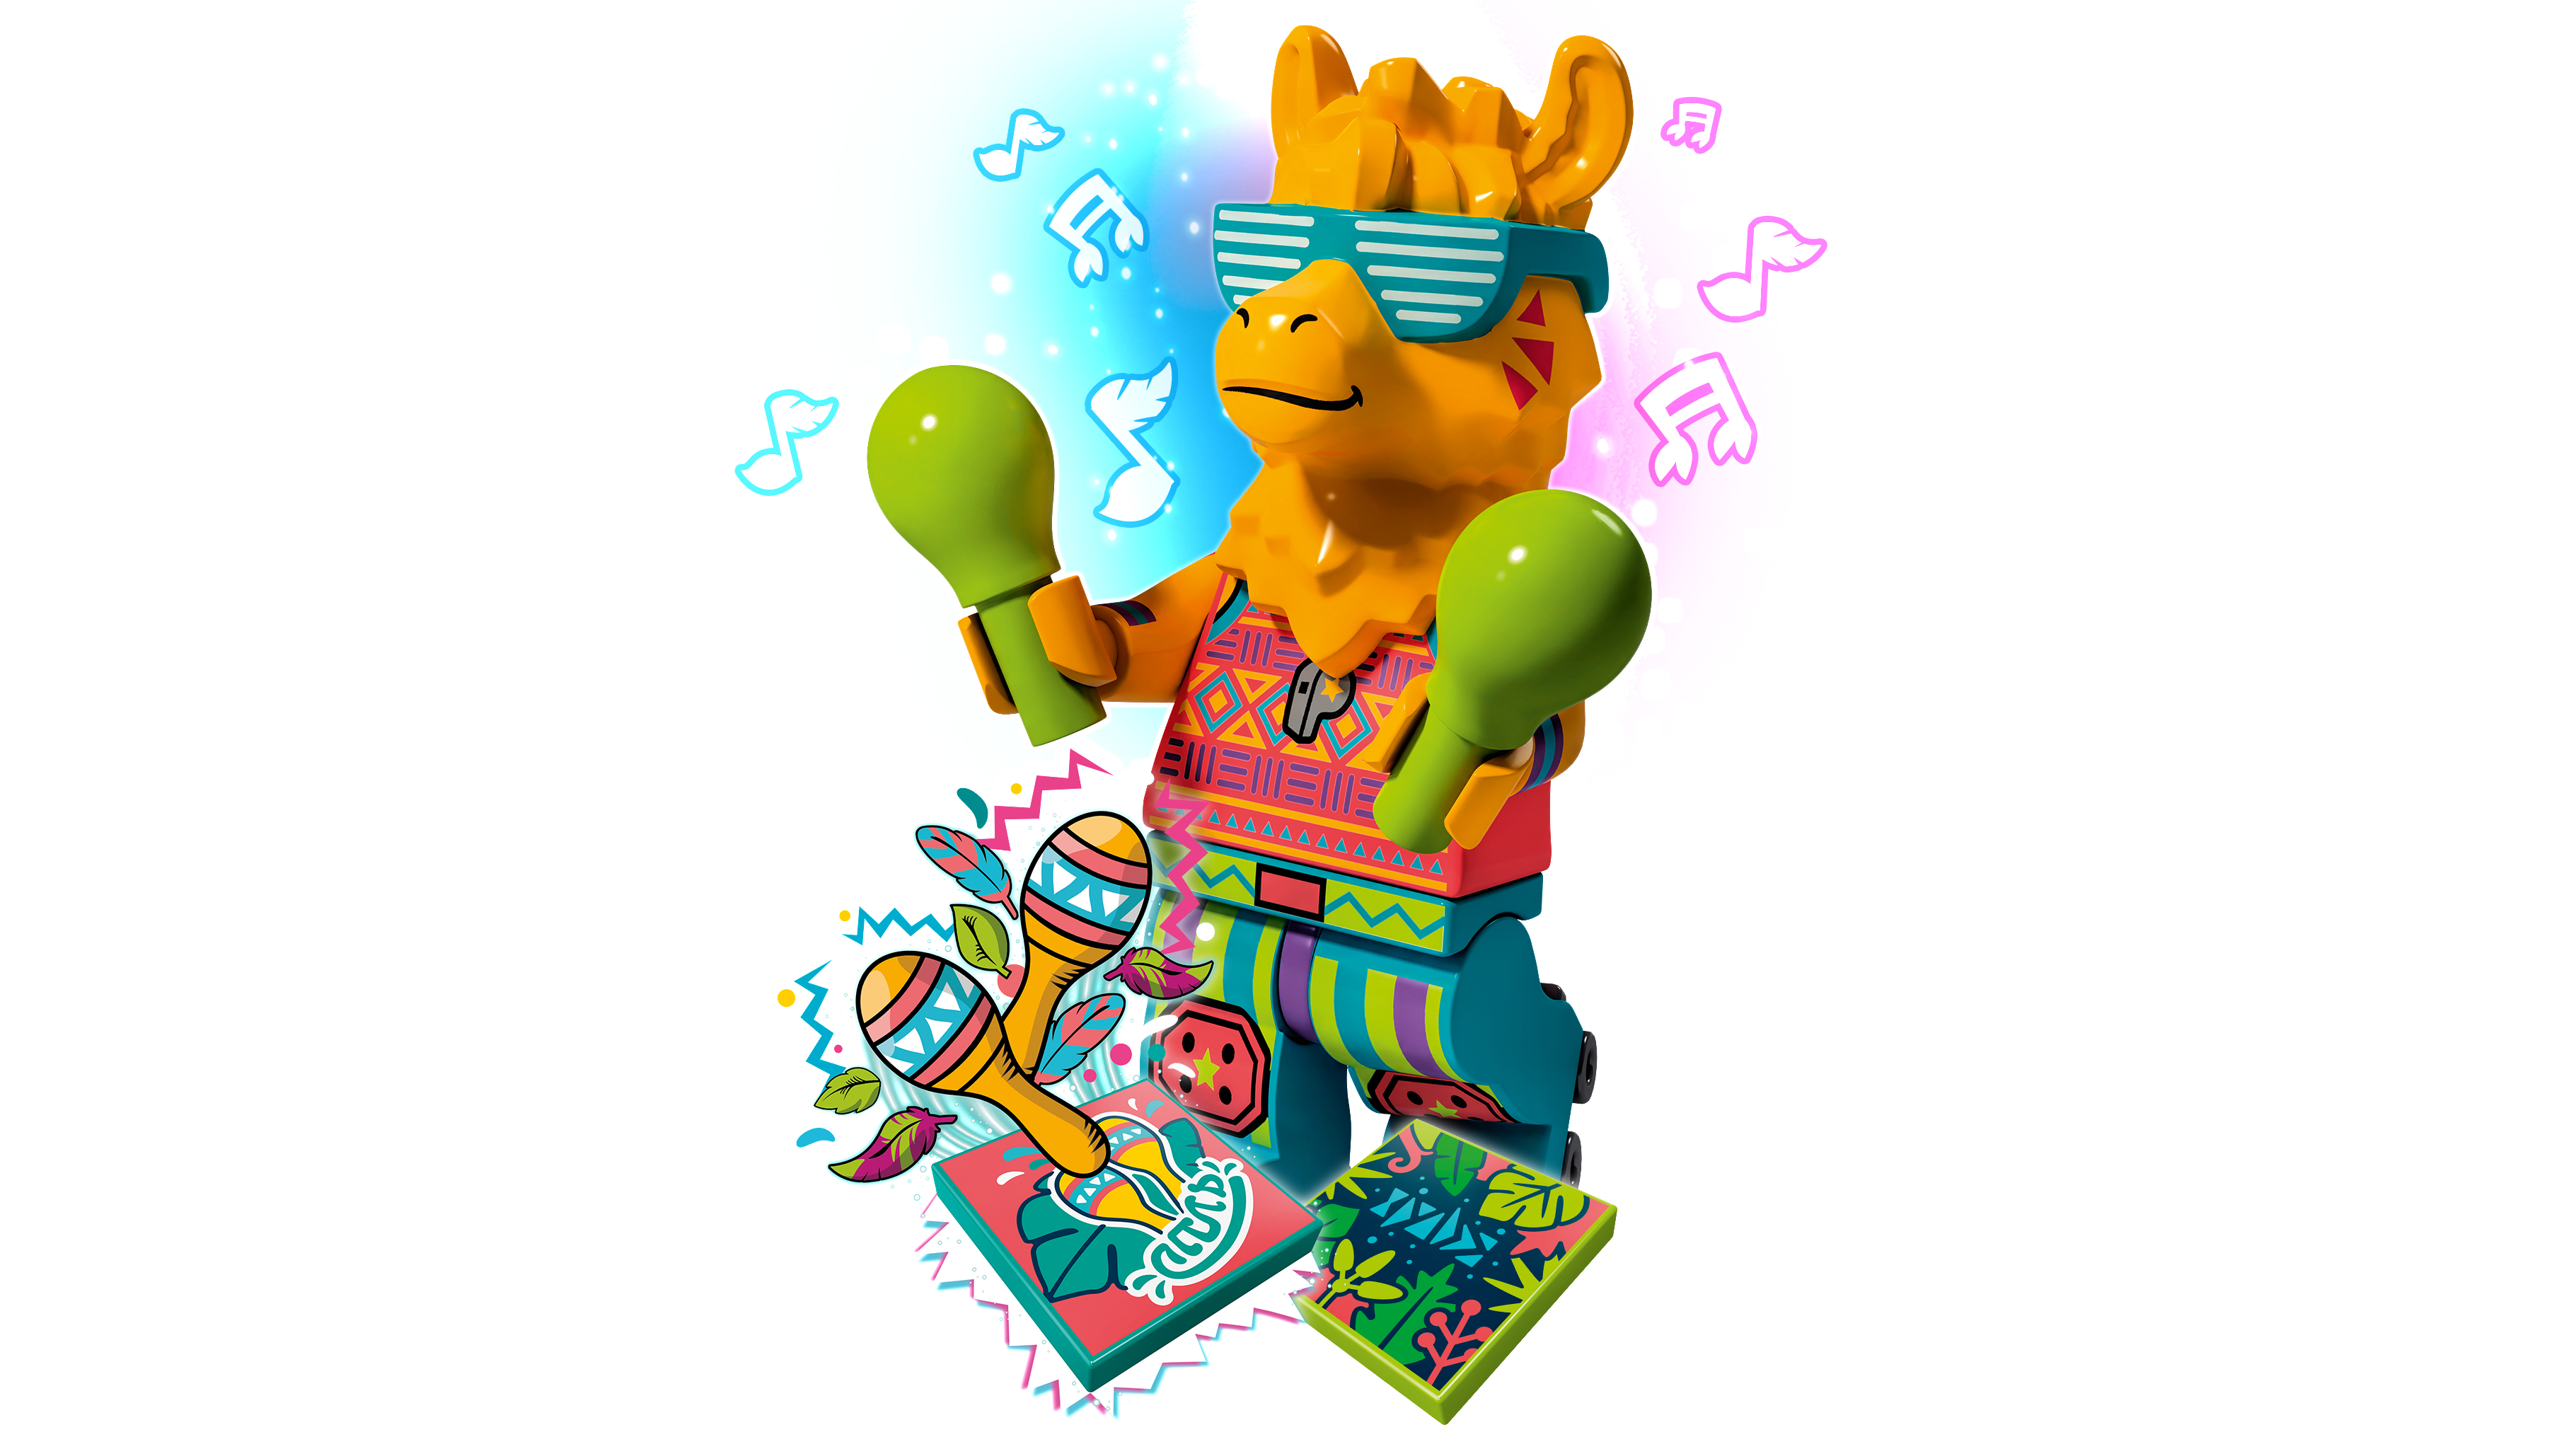 LEGO 43105 Party Mehrfarbig Bausatz, BeatBox Llama